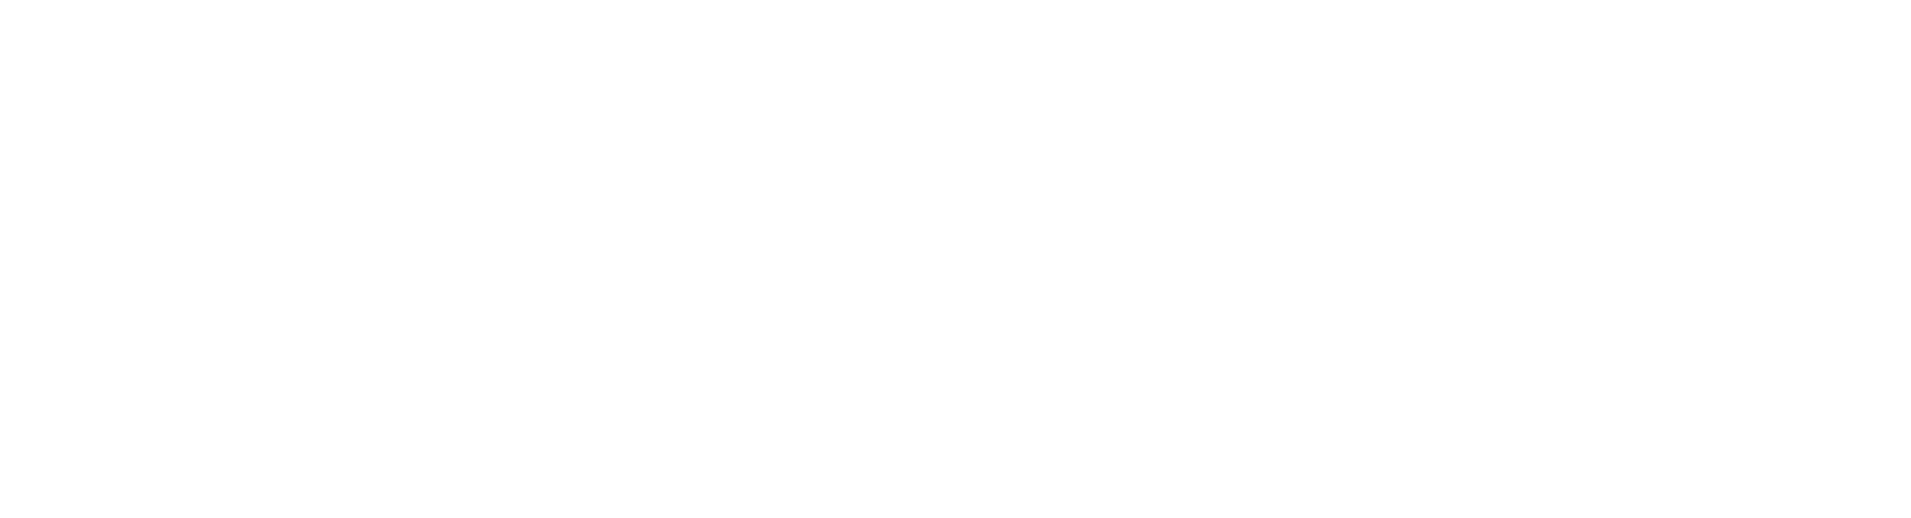 1mm logo